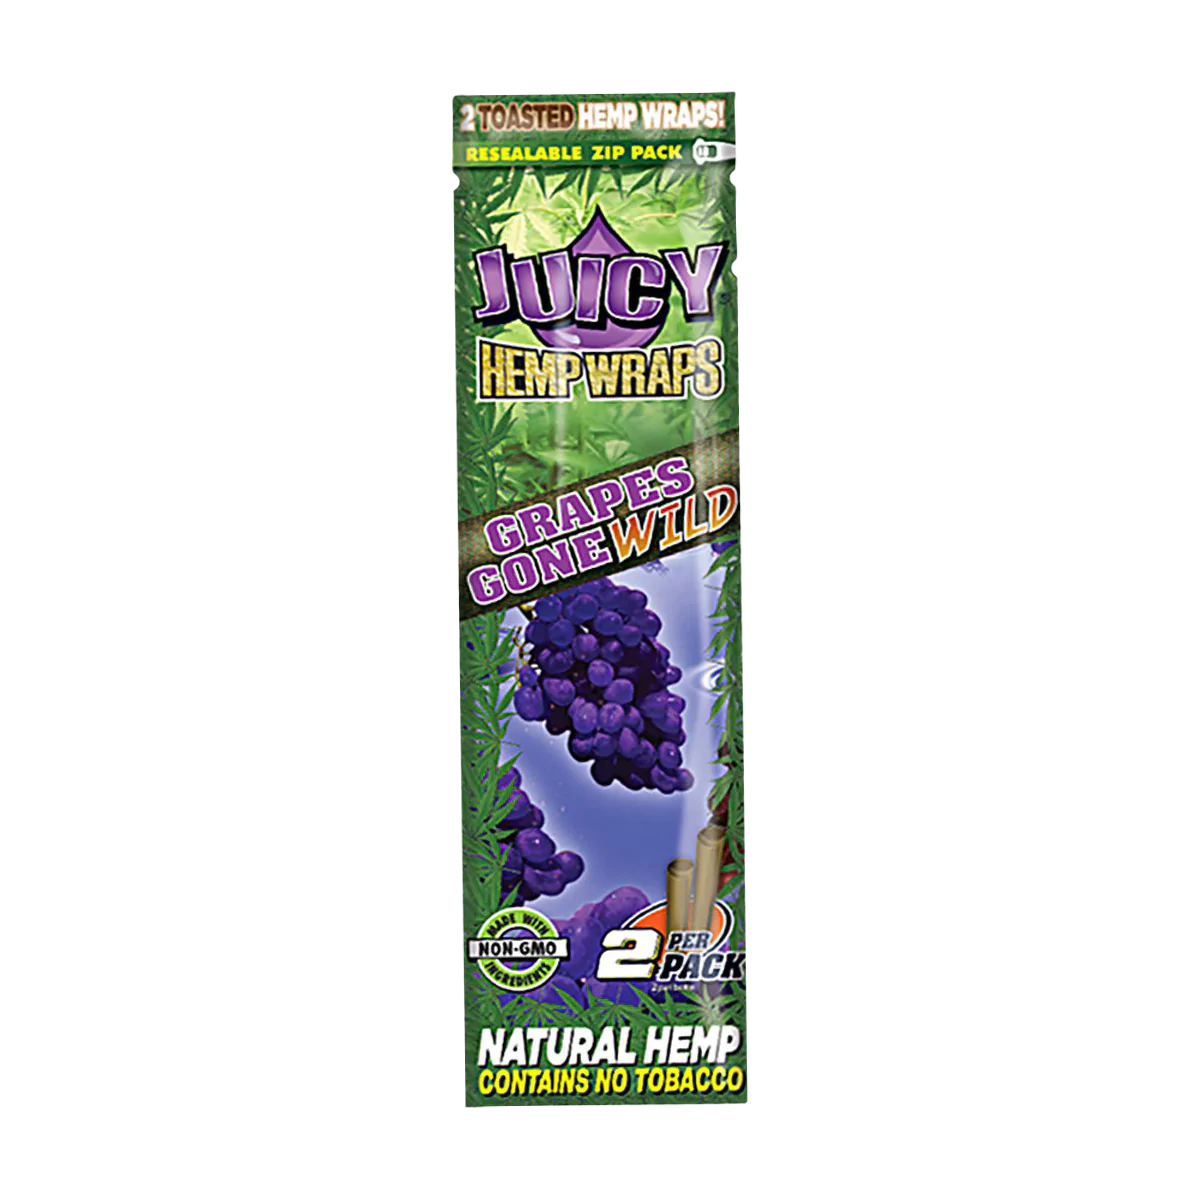 Juicy Jays Hemp Wraps 25 Pack - Grapes Gone Wild Flavor - Front View